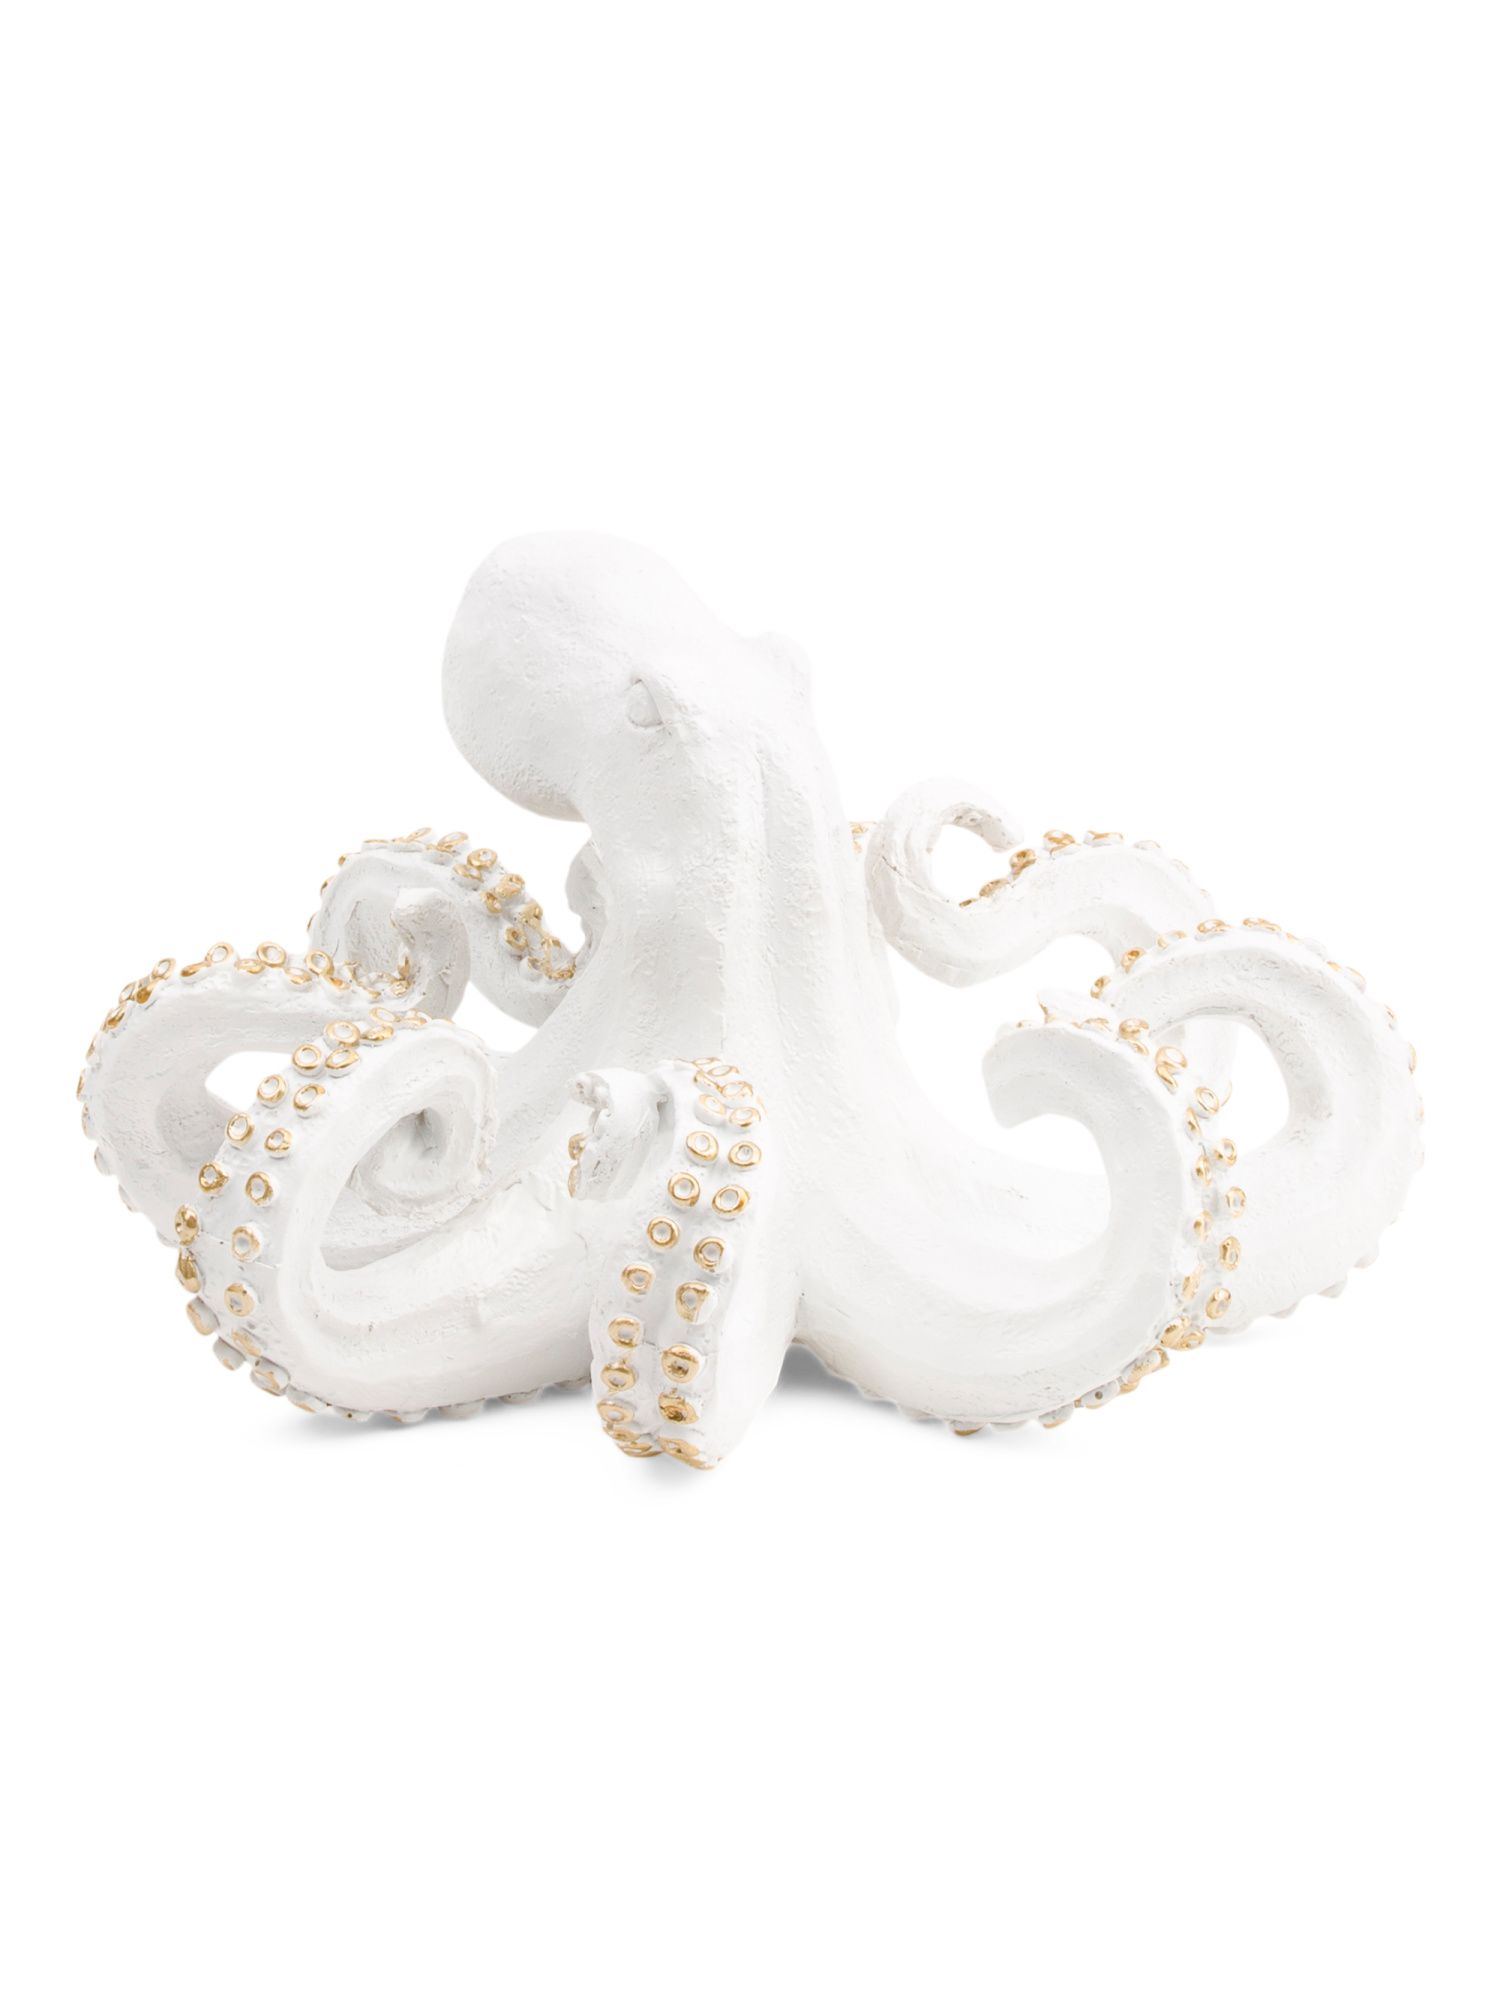 12in Octopus Decorative Accent | TJ Maxx